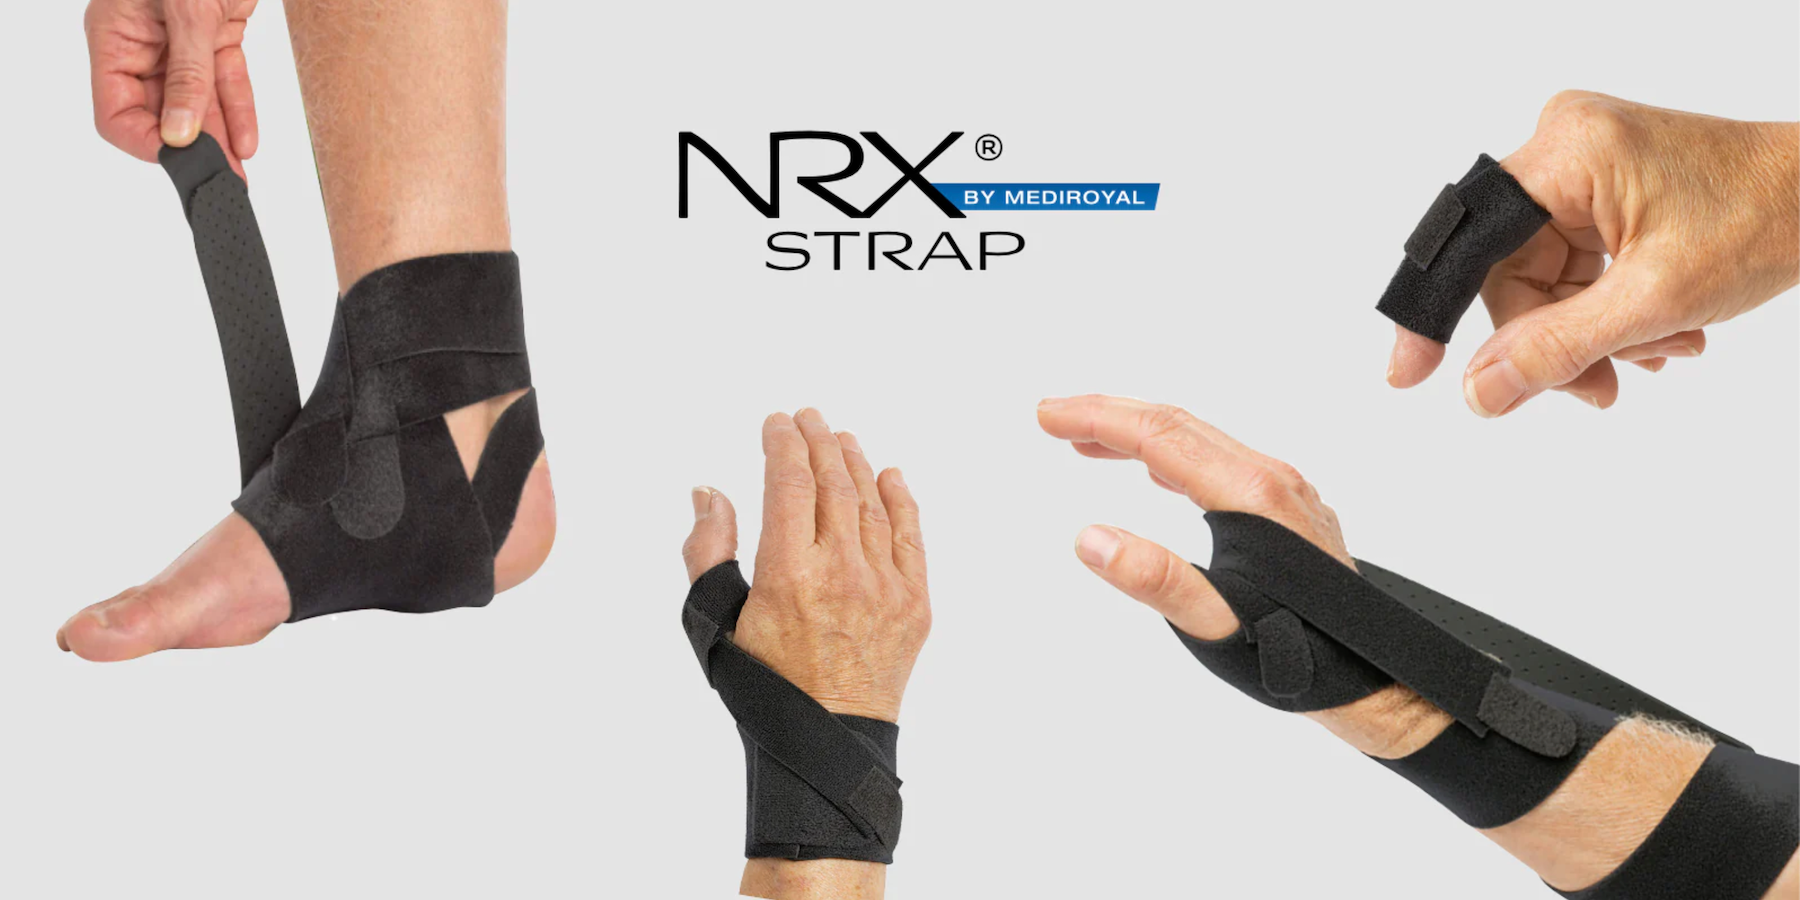 NRX Straps